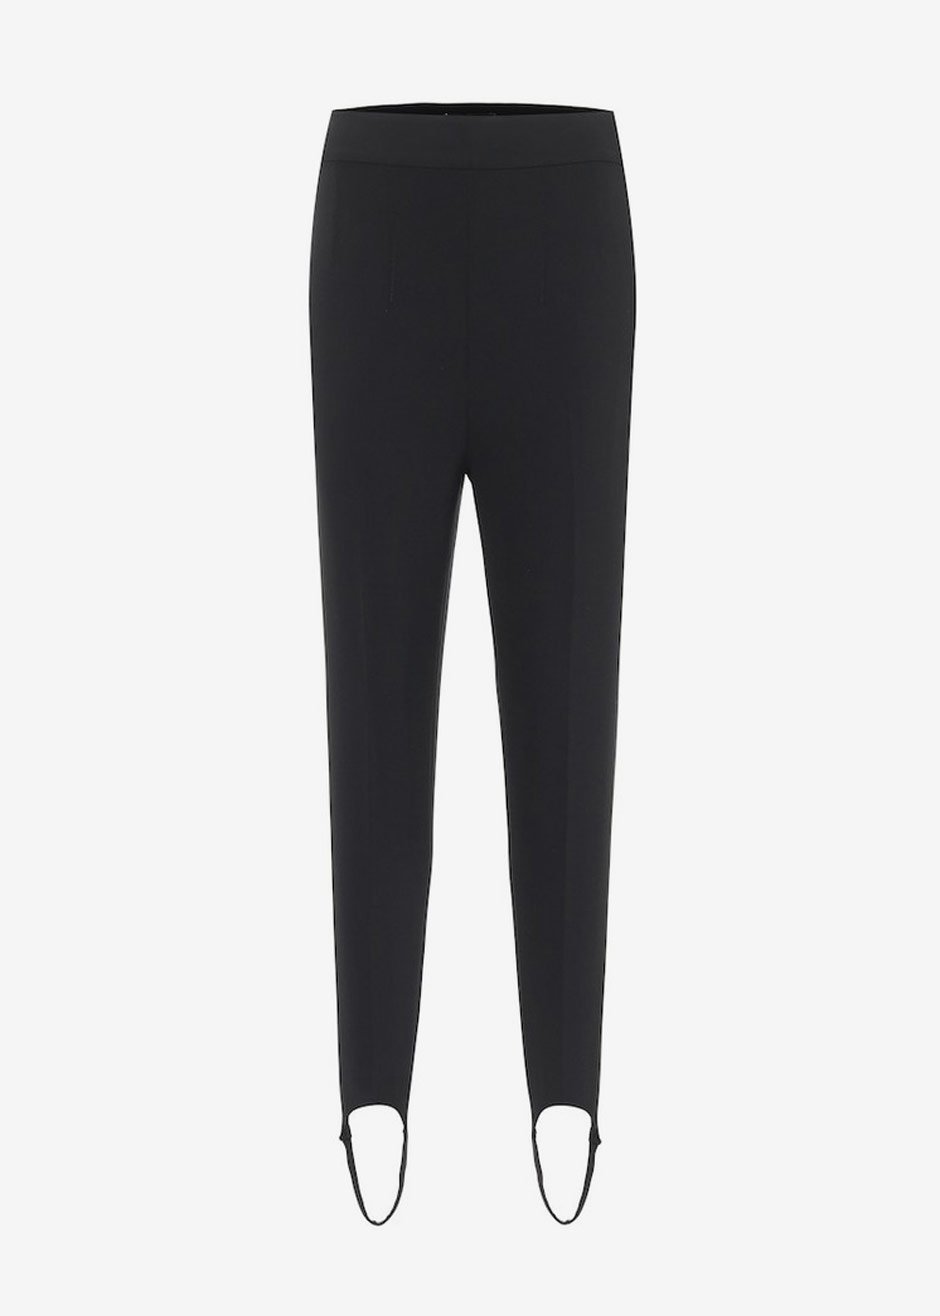 Buy Zeronic Women's High Waist Stirrup Leggings Tights Gym Workout Yoga  Pants (Black, X-Small) at